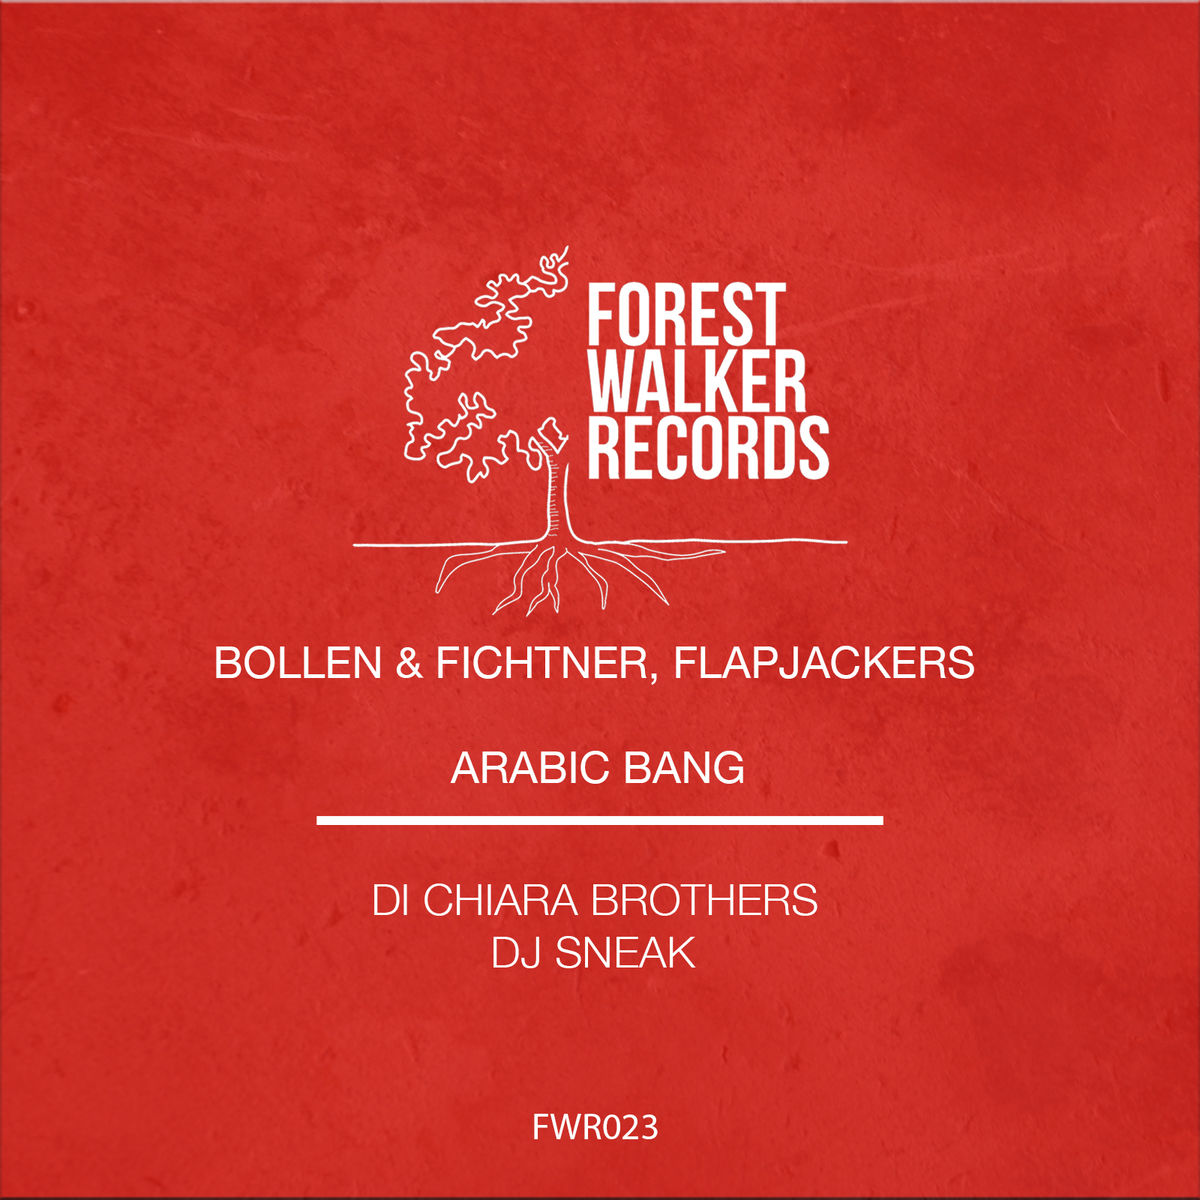 Bollen & Fichtner & Flapjackers - Arabic Bang Remix EP / Forest Walker Records